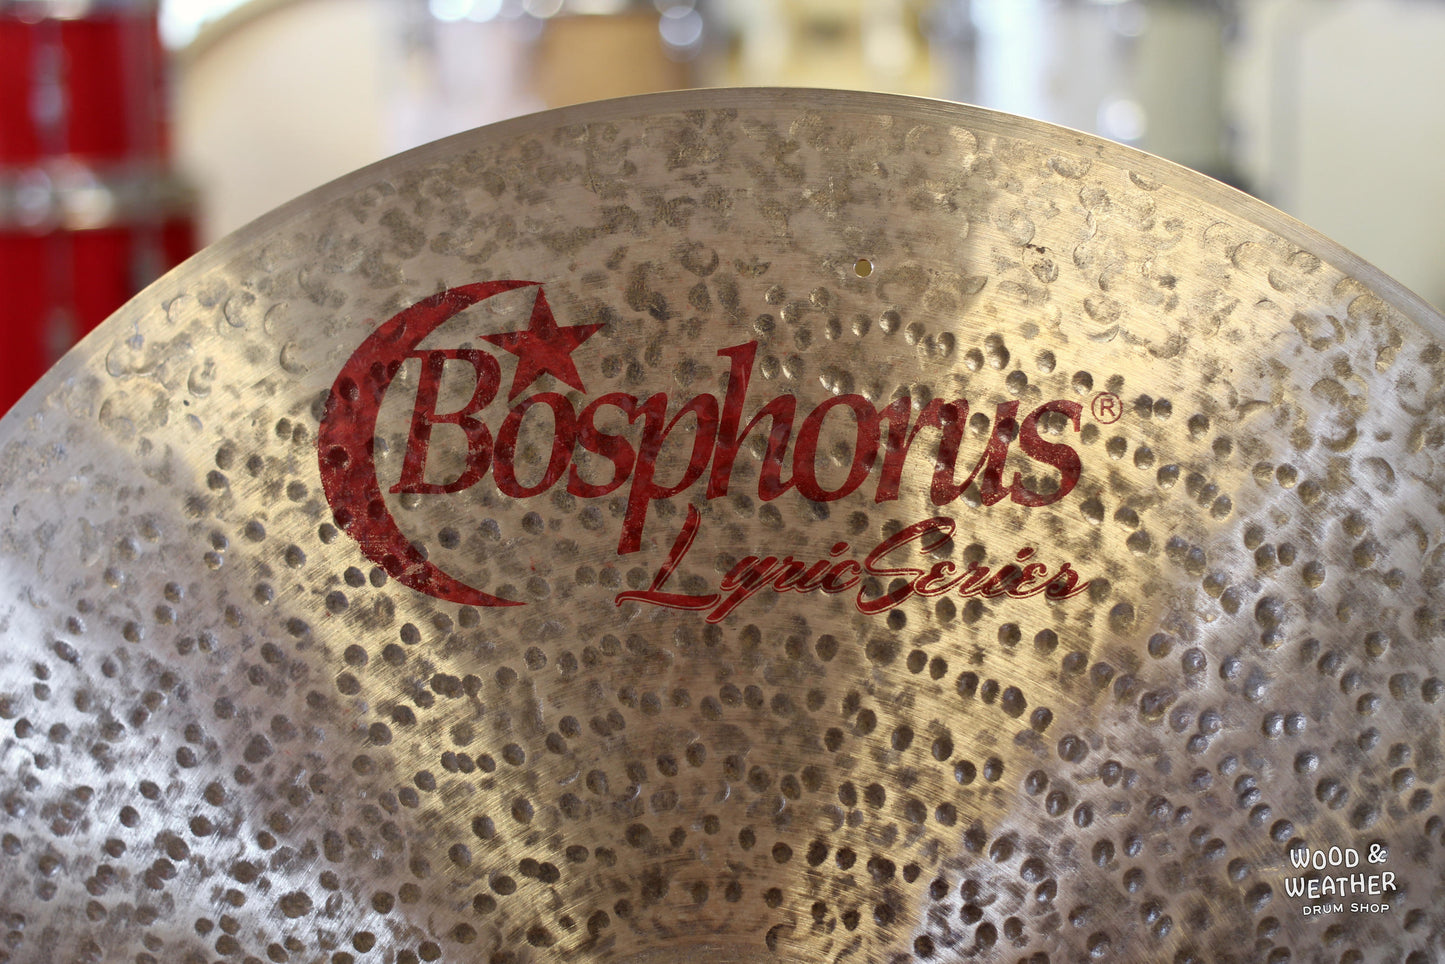 Used Bosphorus Cymbals 21" Lyric Ride Cymbal 2422g